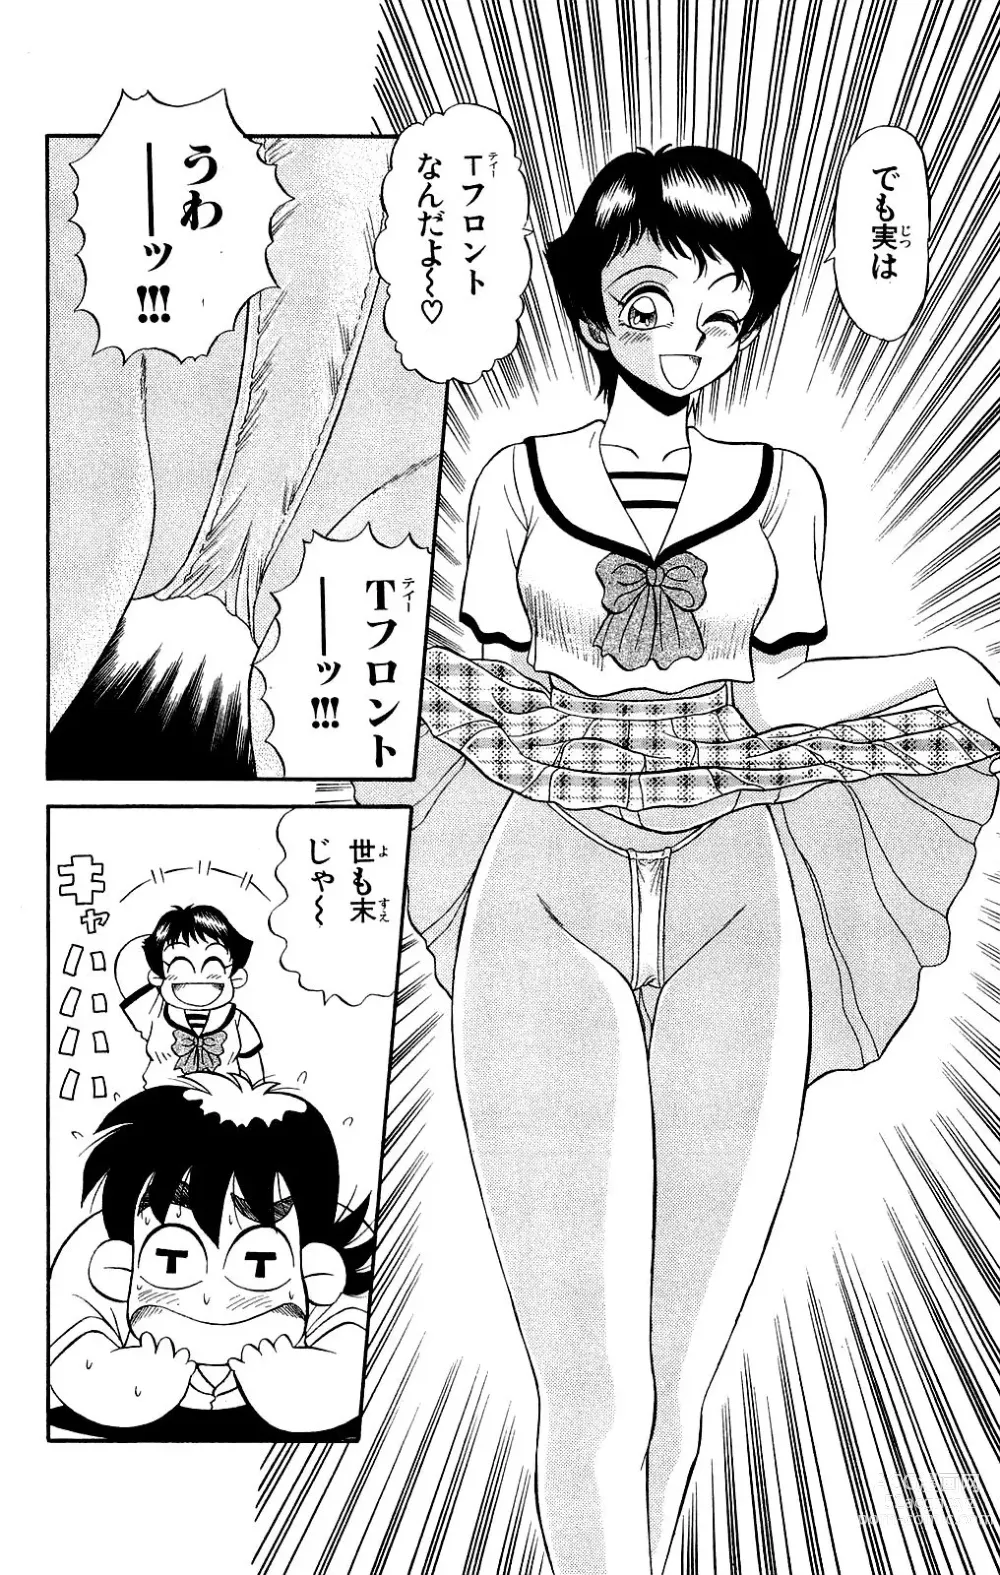 Page 18 of manga Orette Piyoritan Vol. 2